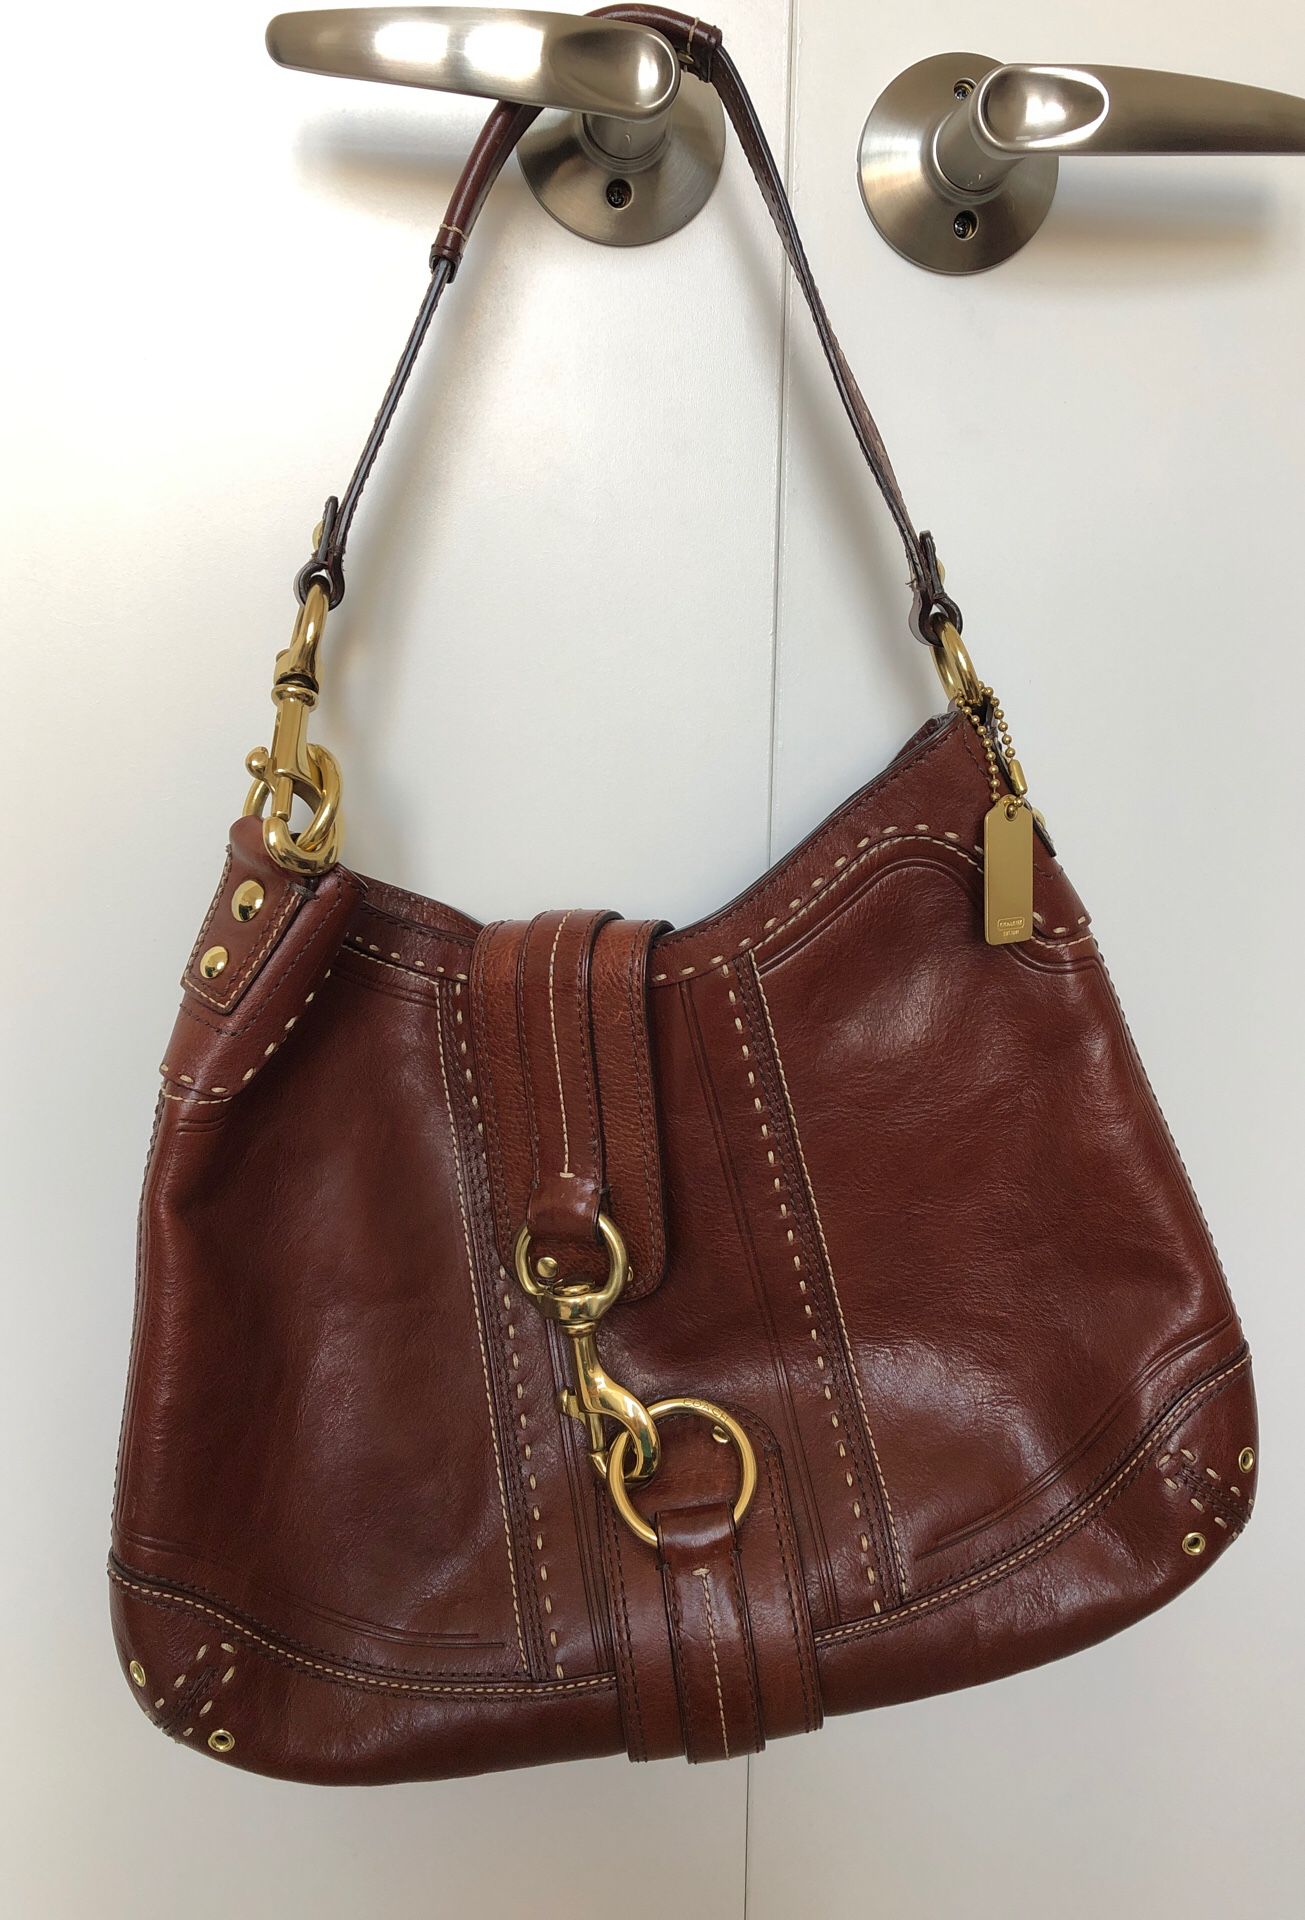 Coach medium brown leather handbag